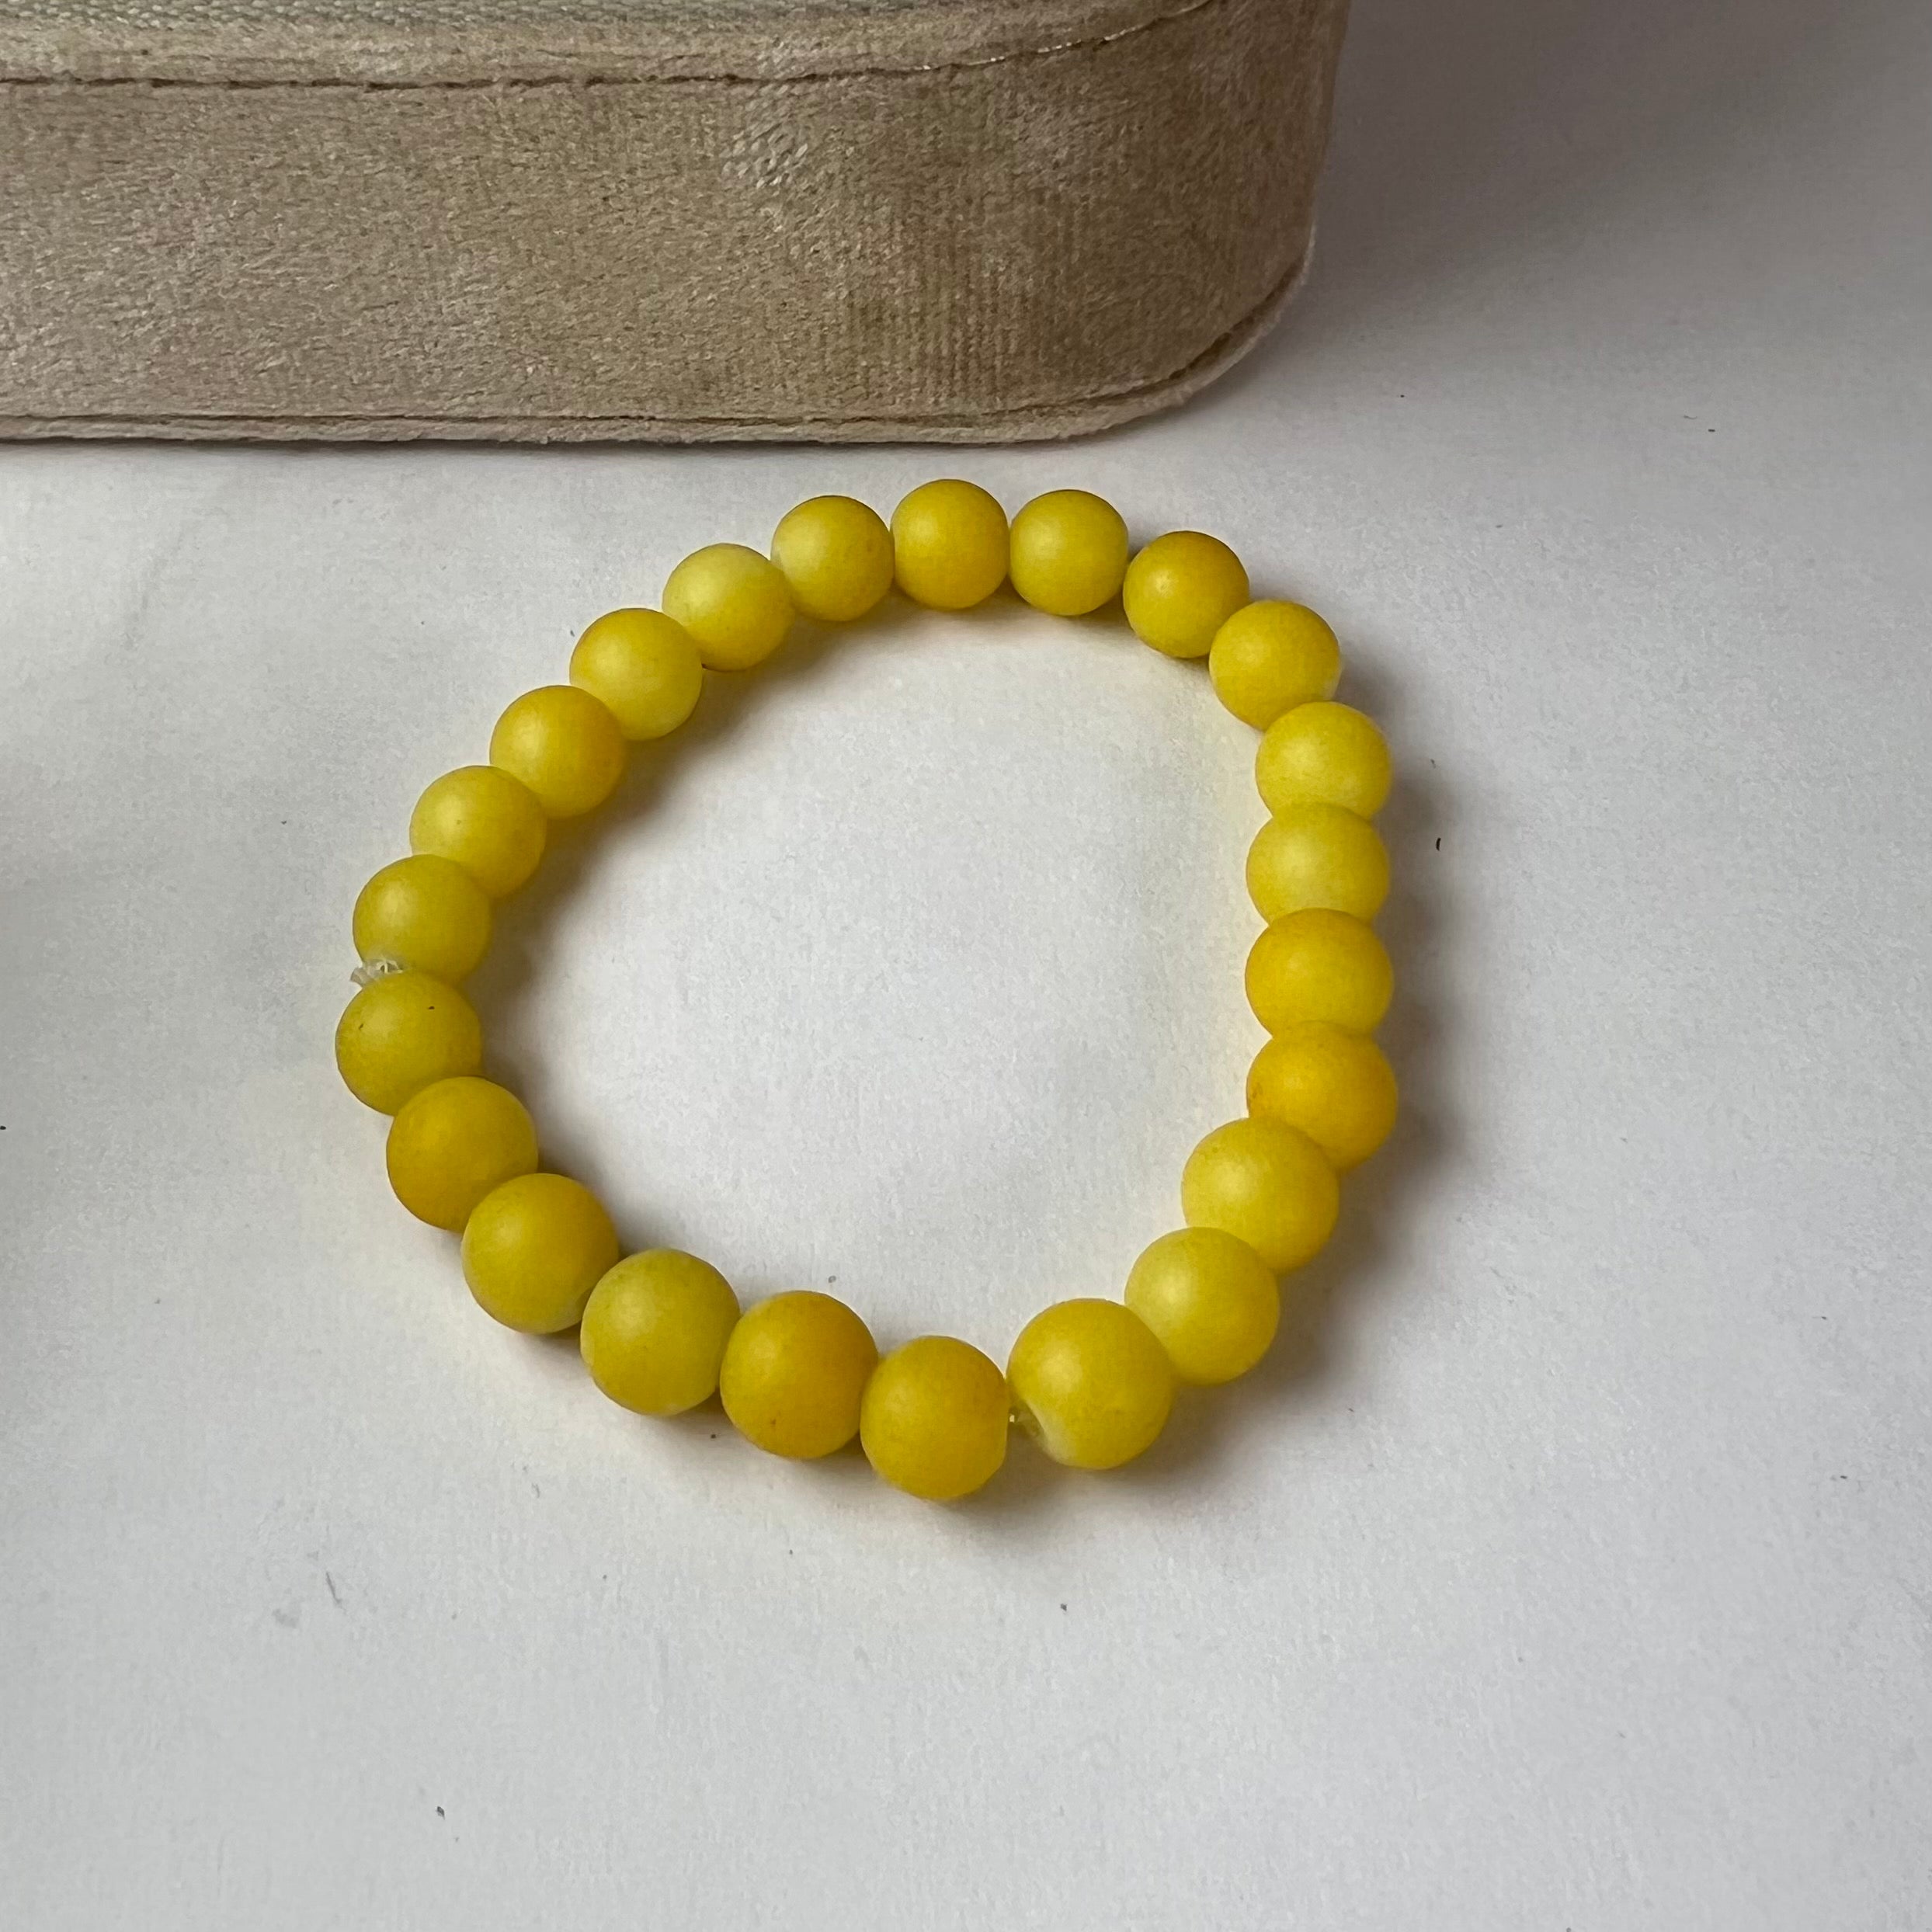 Buy SATYAMANI Natural Energized Original Yellow Jade Beads Bracelet with  Hook Pack of 1 Pc at Amazonin